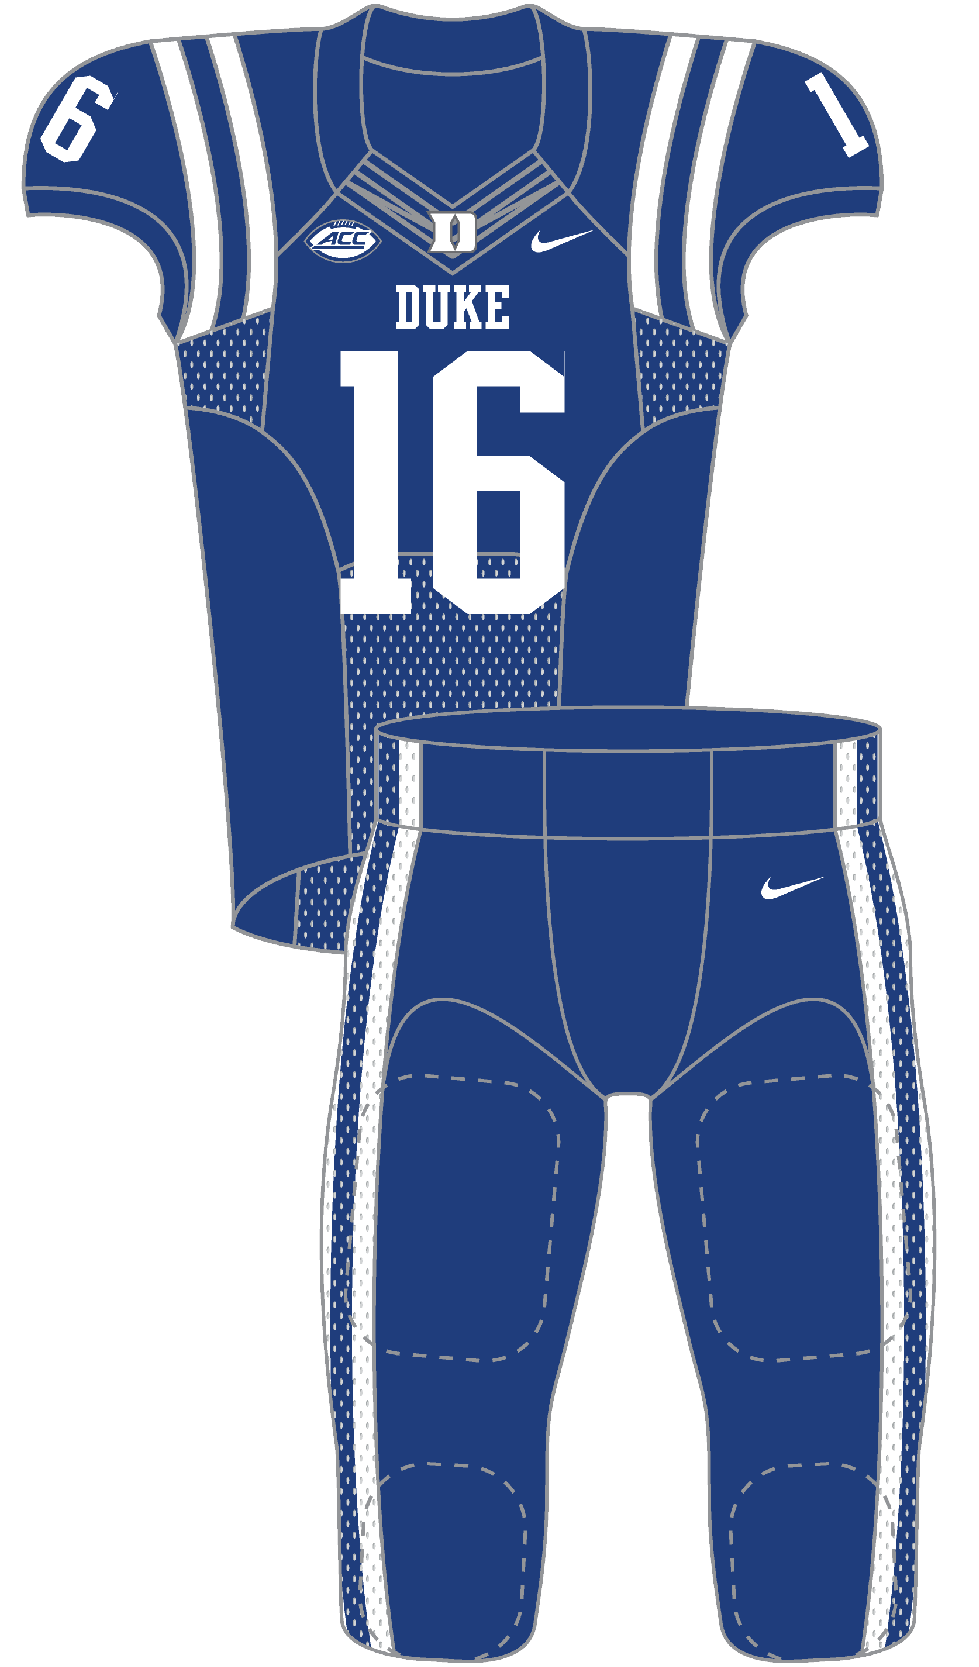 Duke 2016 Blue Uniform